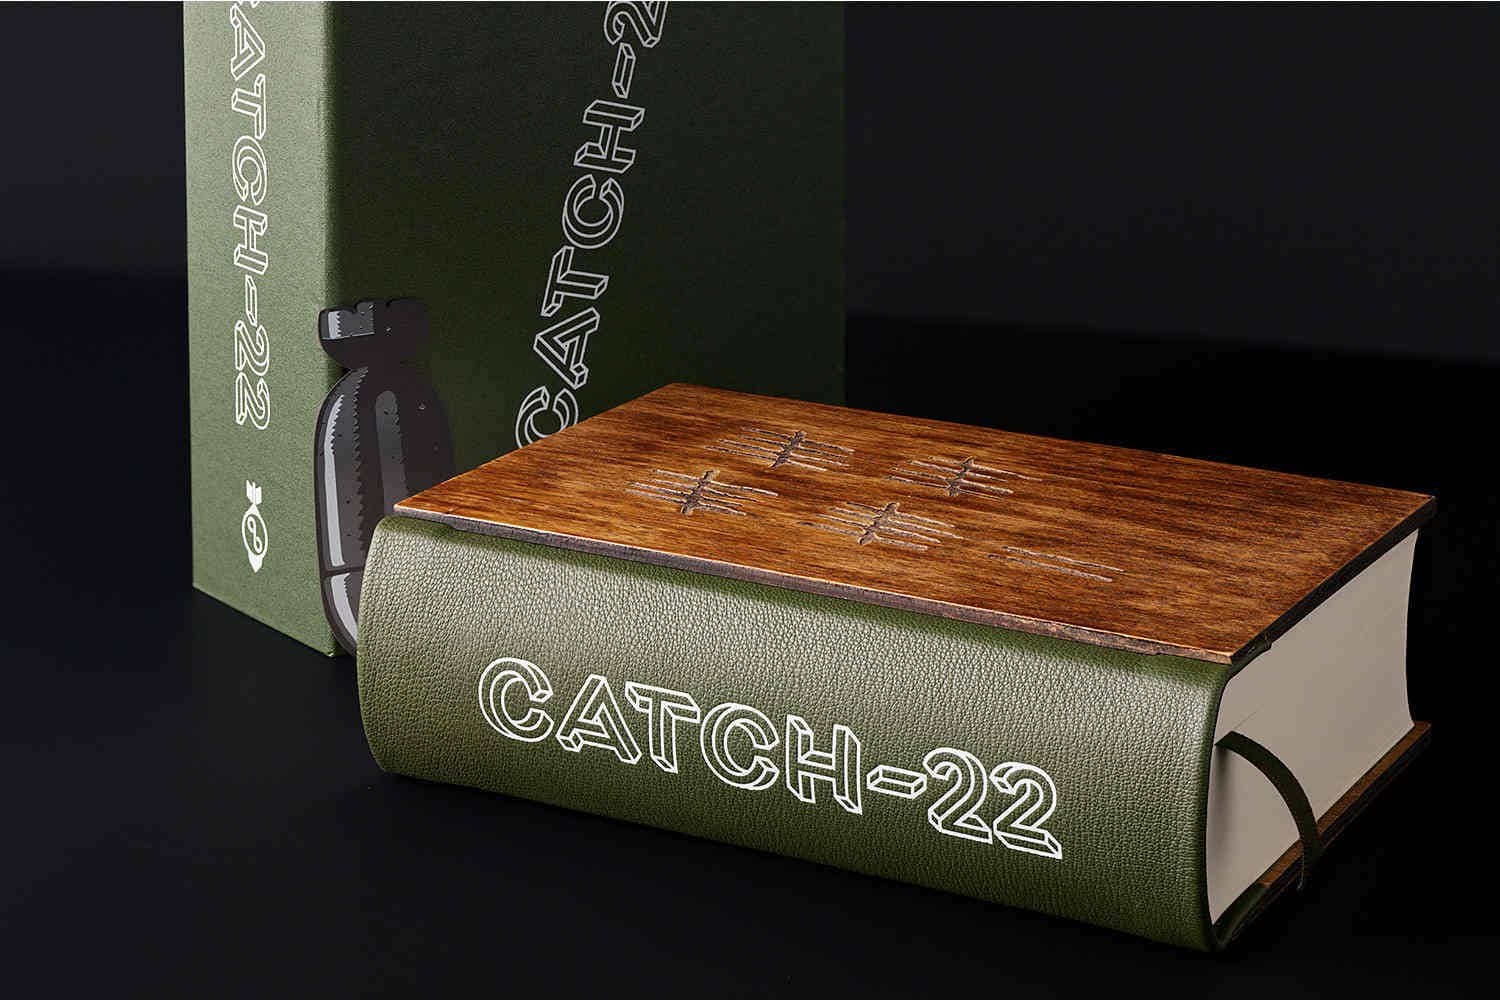 Catch-22 - National Book Foundation